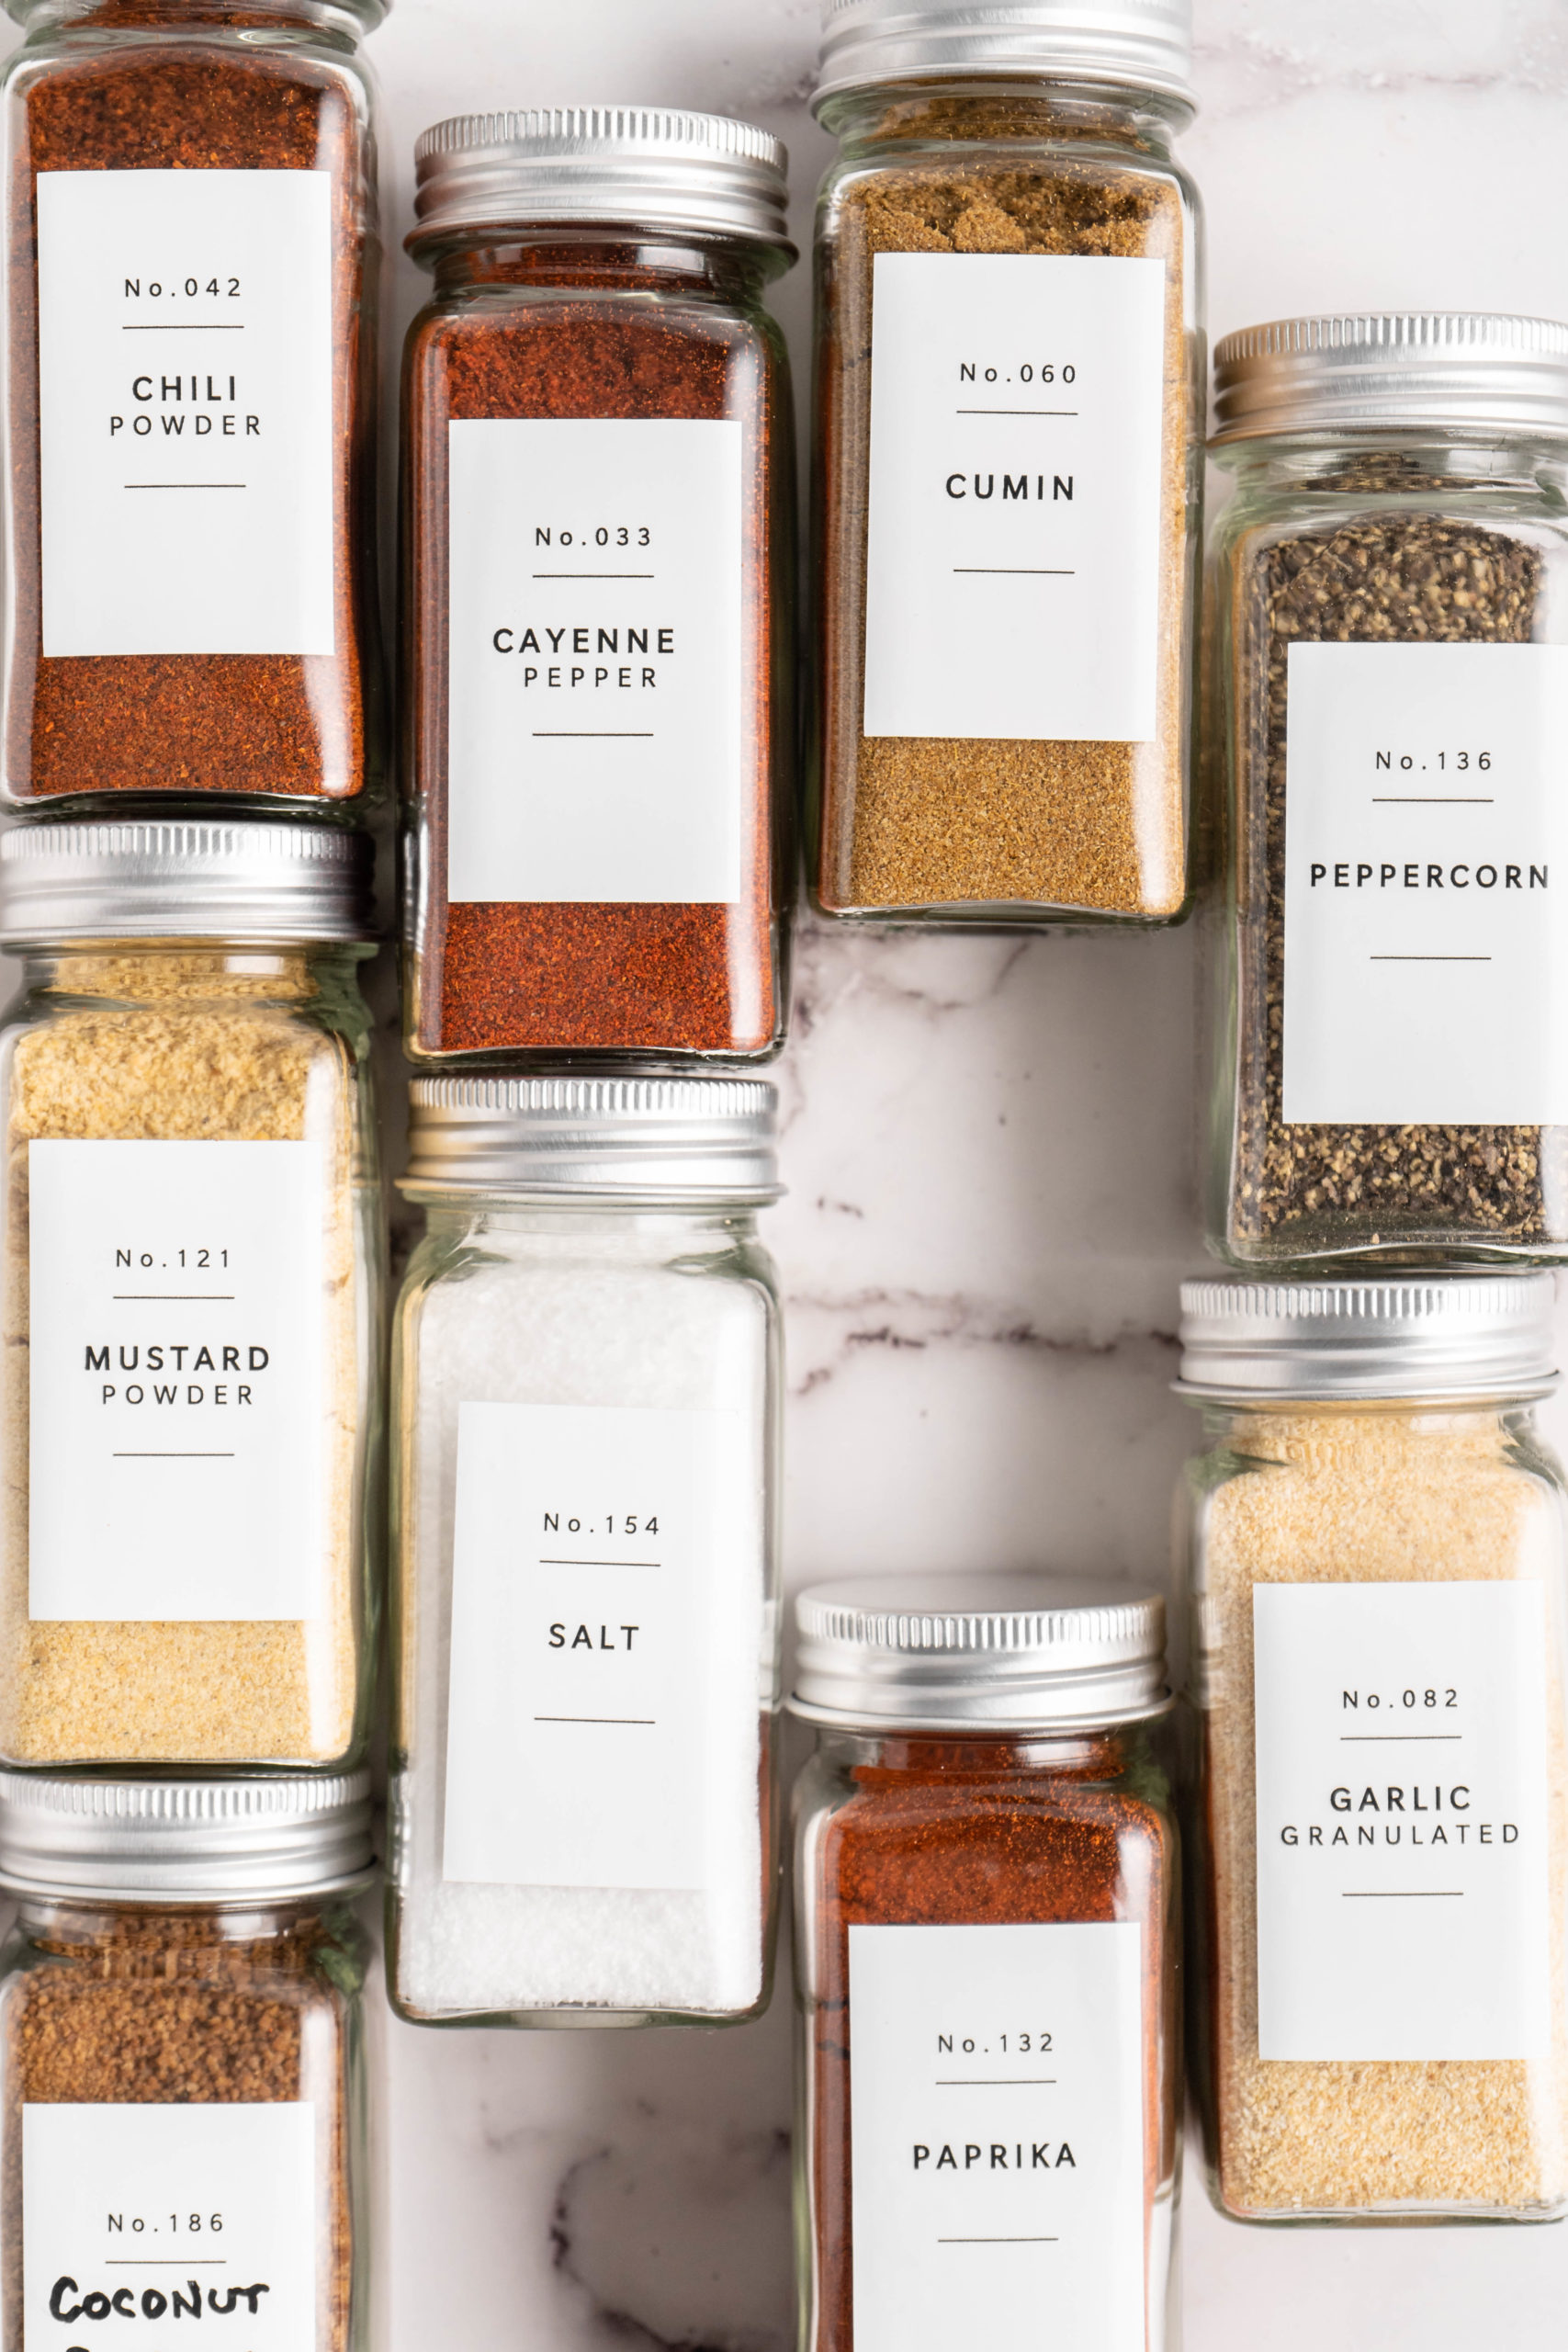 BBQ spice rub ingredients in spice jars